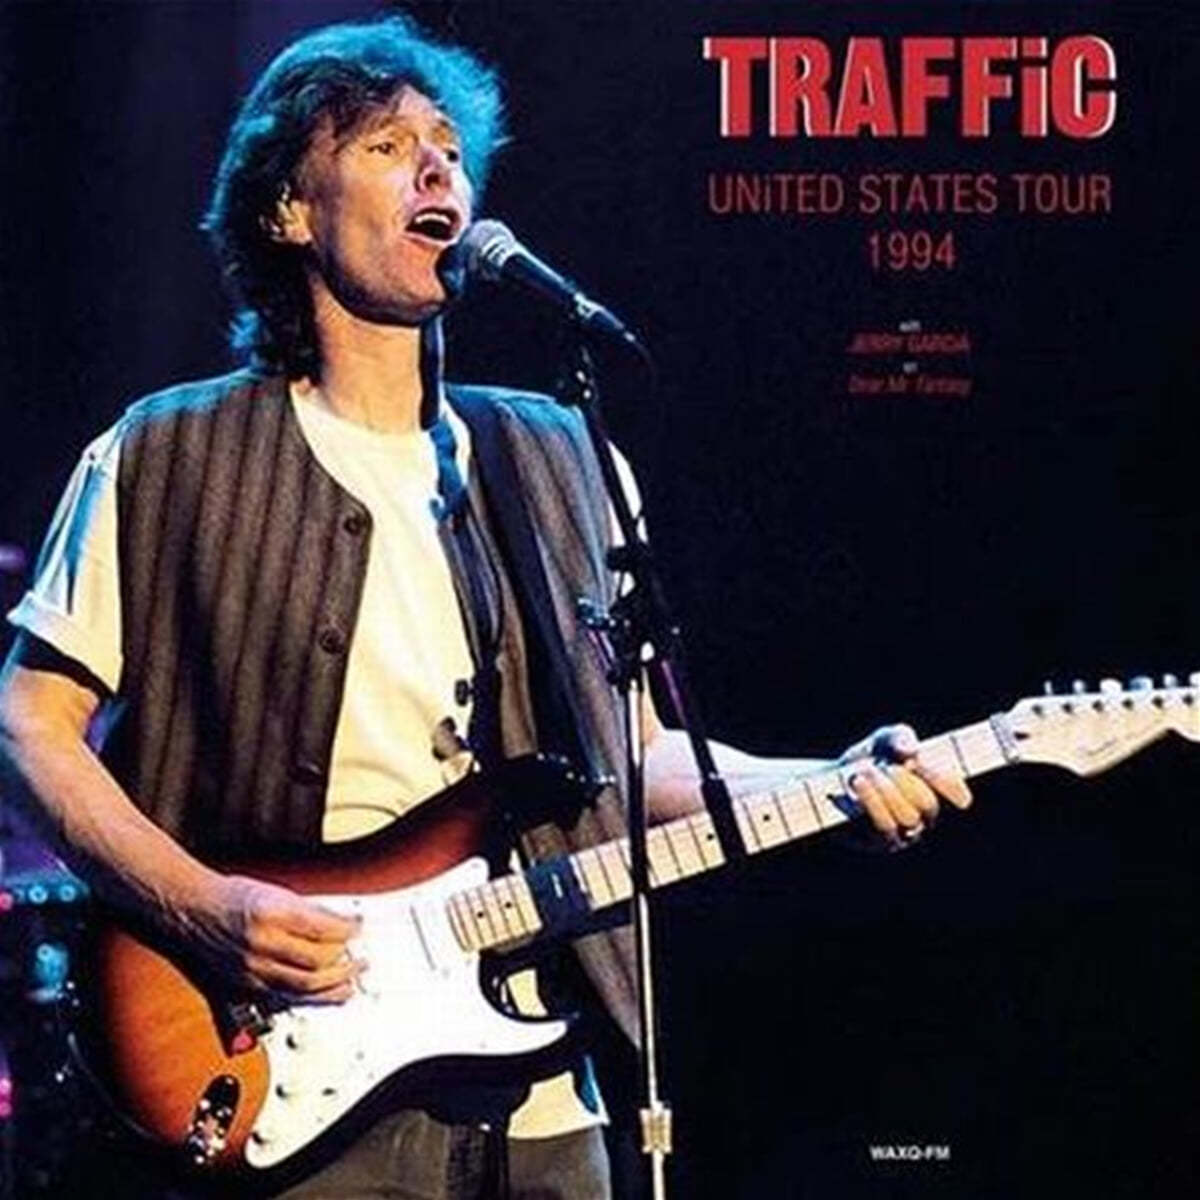 Traffic (트래픽) - United States Tour 1994: WAXQ-FM [LP] 